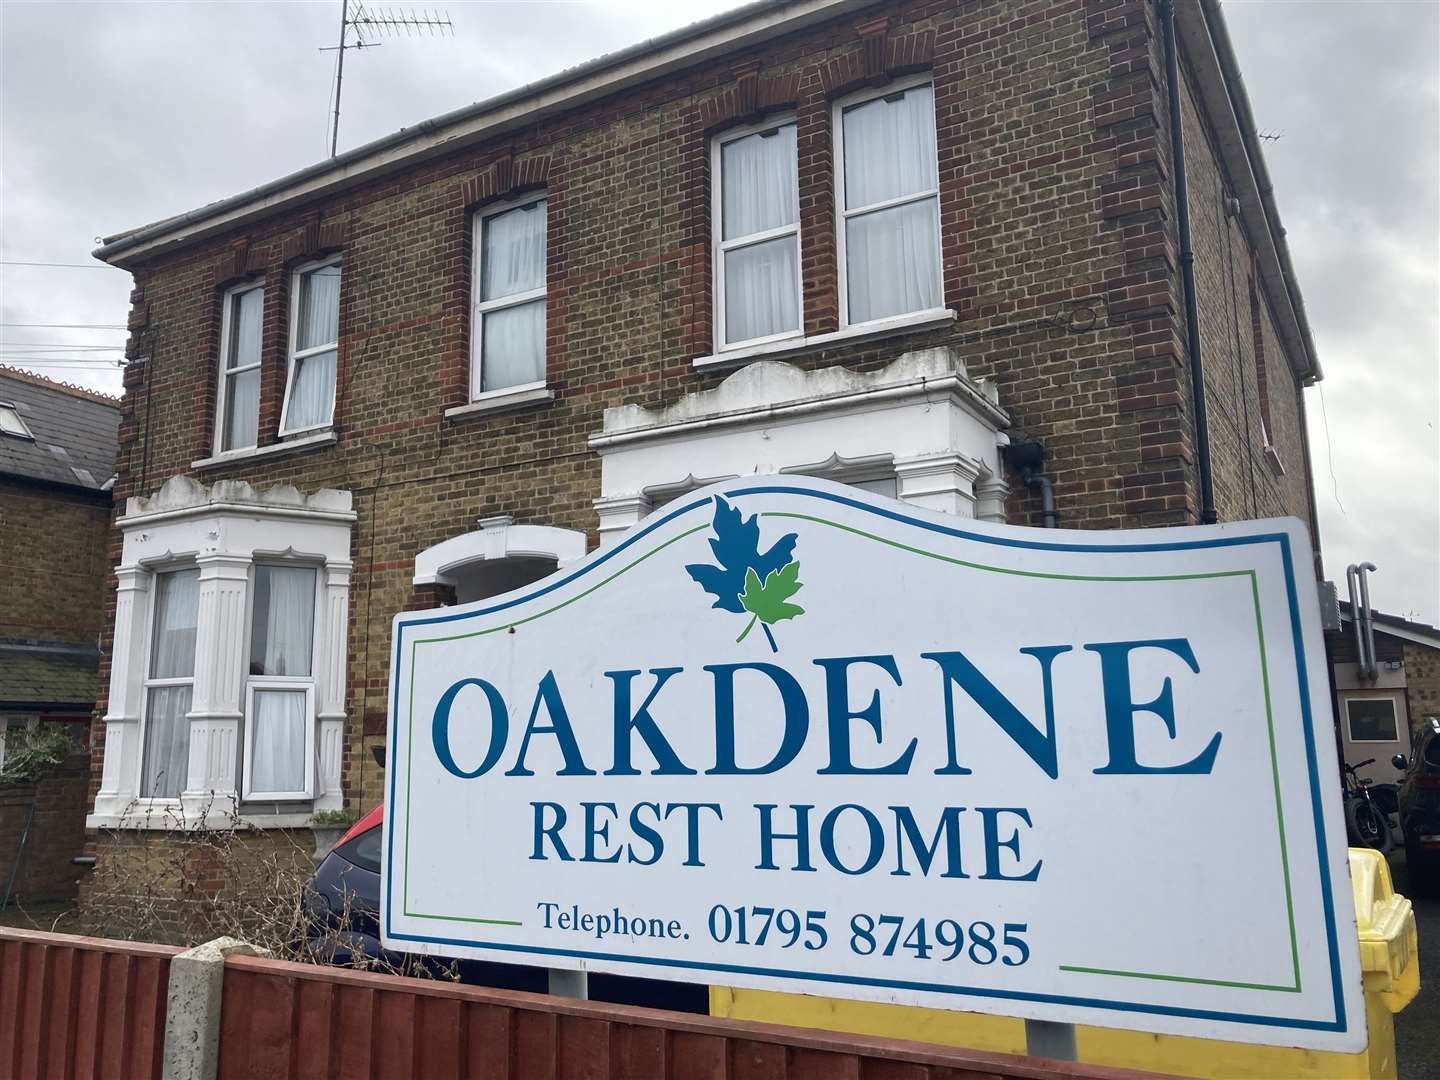 Oakdene Rest Home in Minster, Sheppey